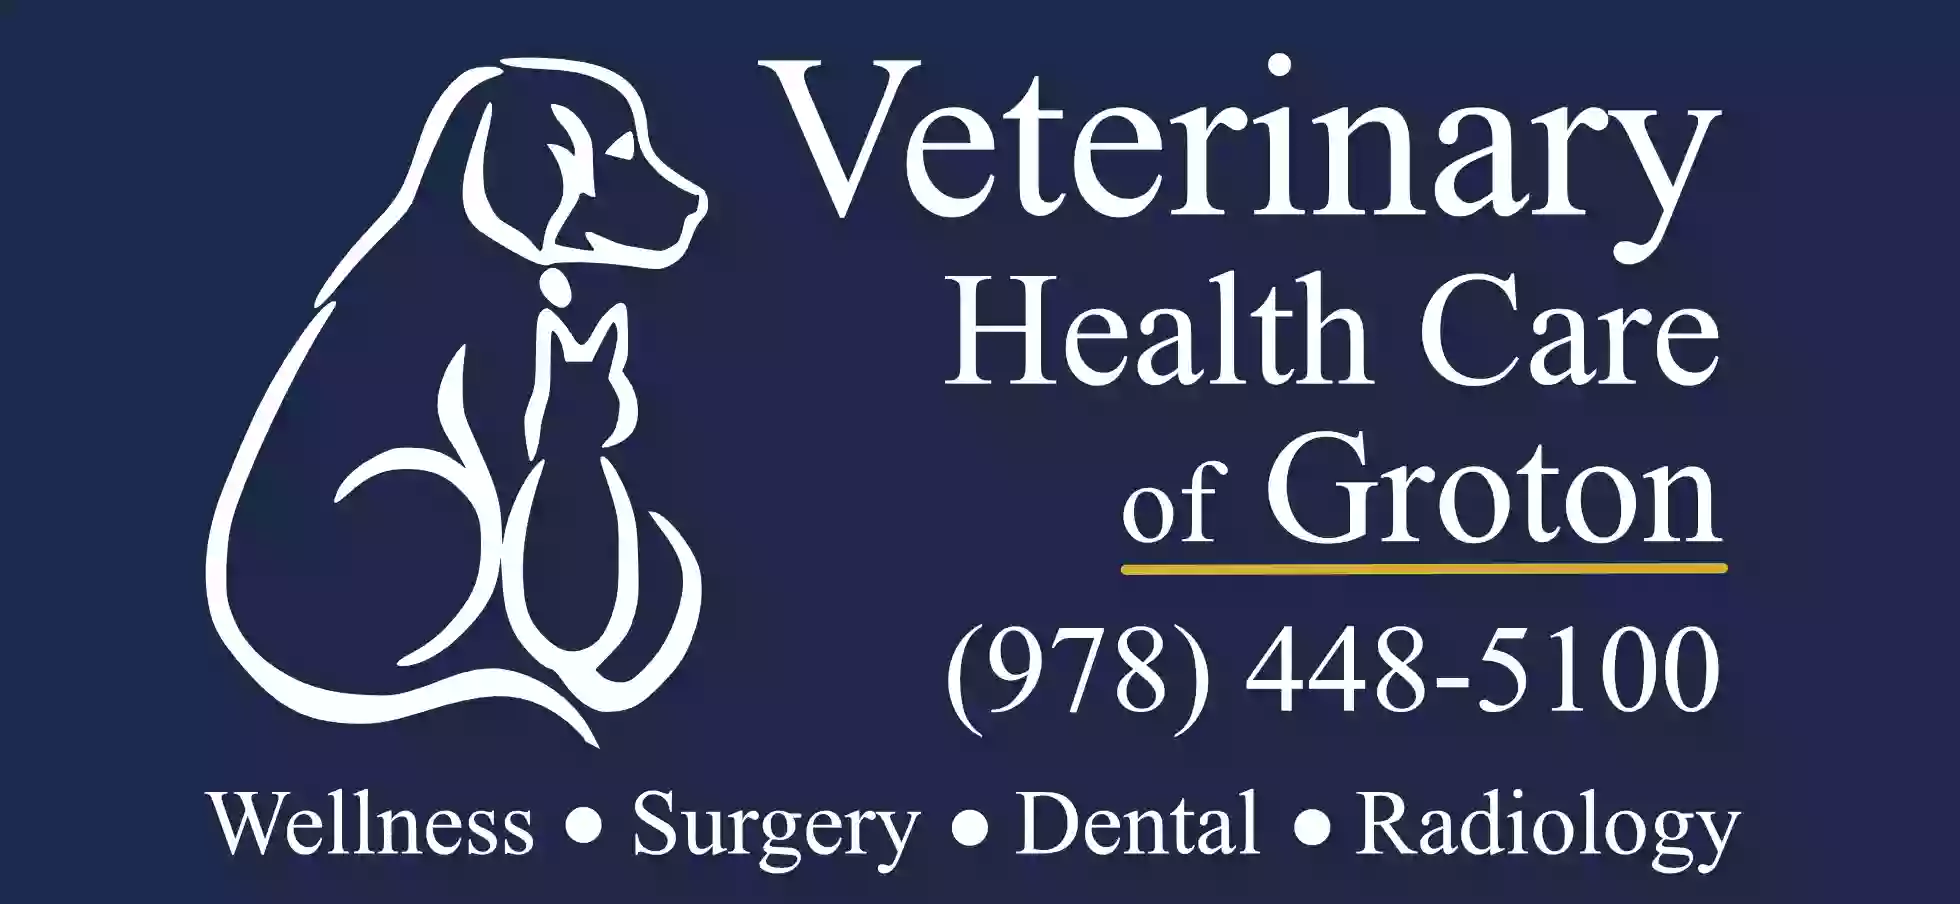 Veterinary Health Care of Groton